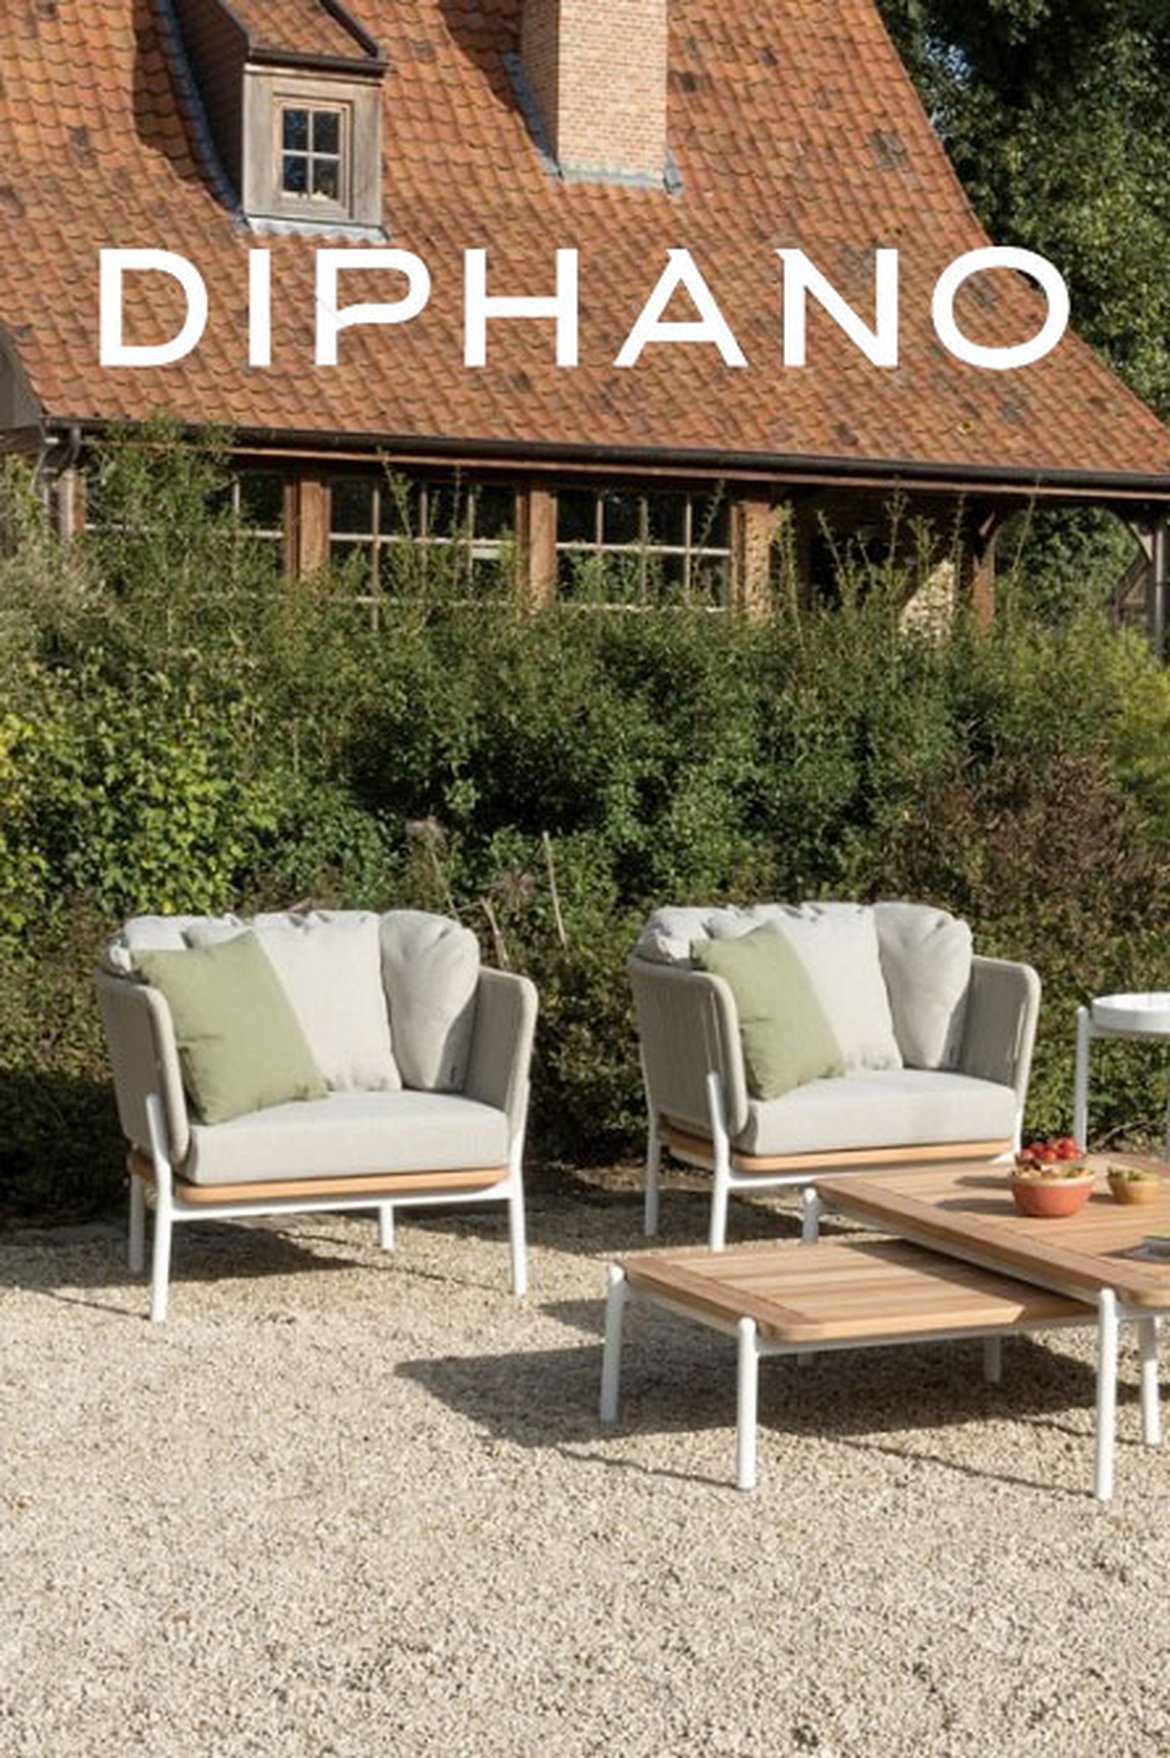 Diphano - Fauteuils de jardin design et originaux - Schilliger